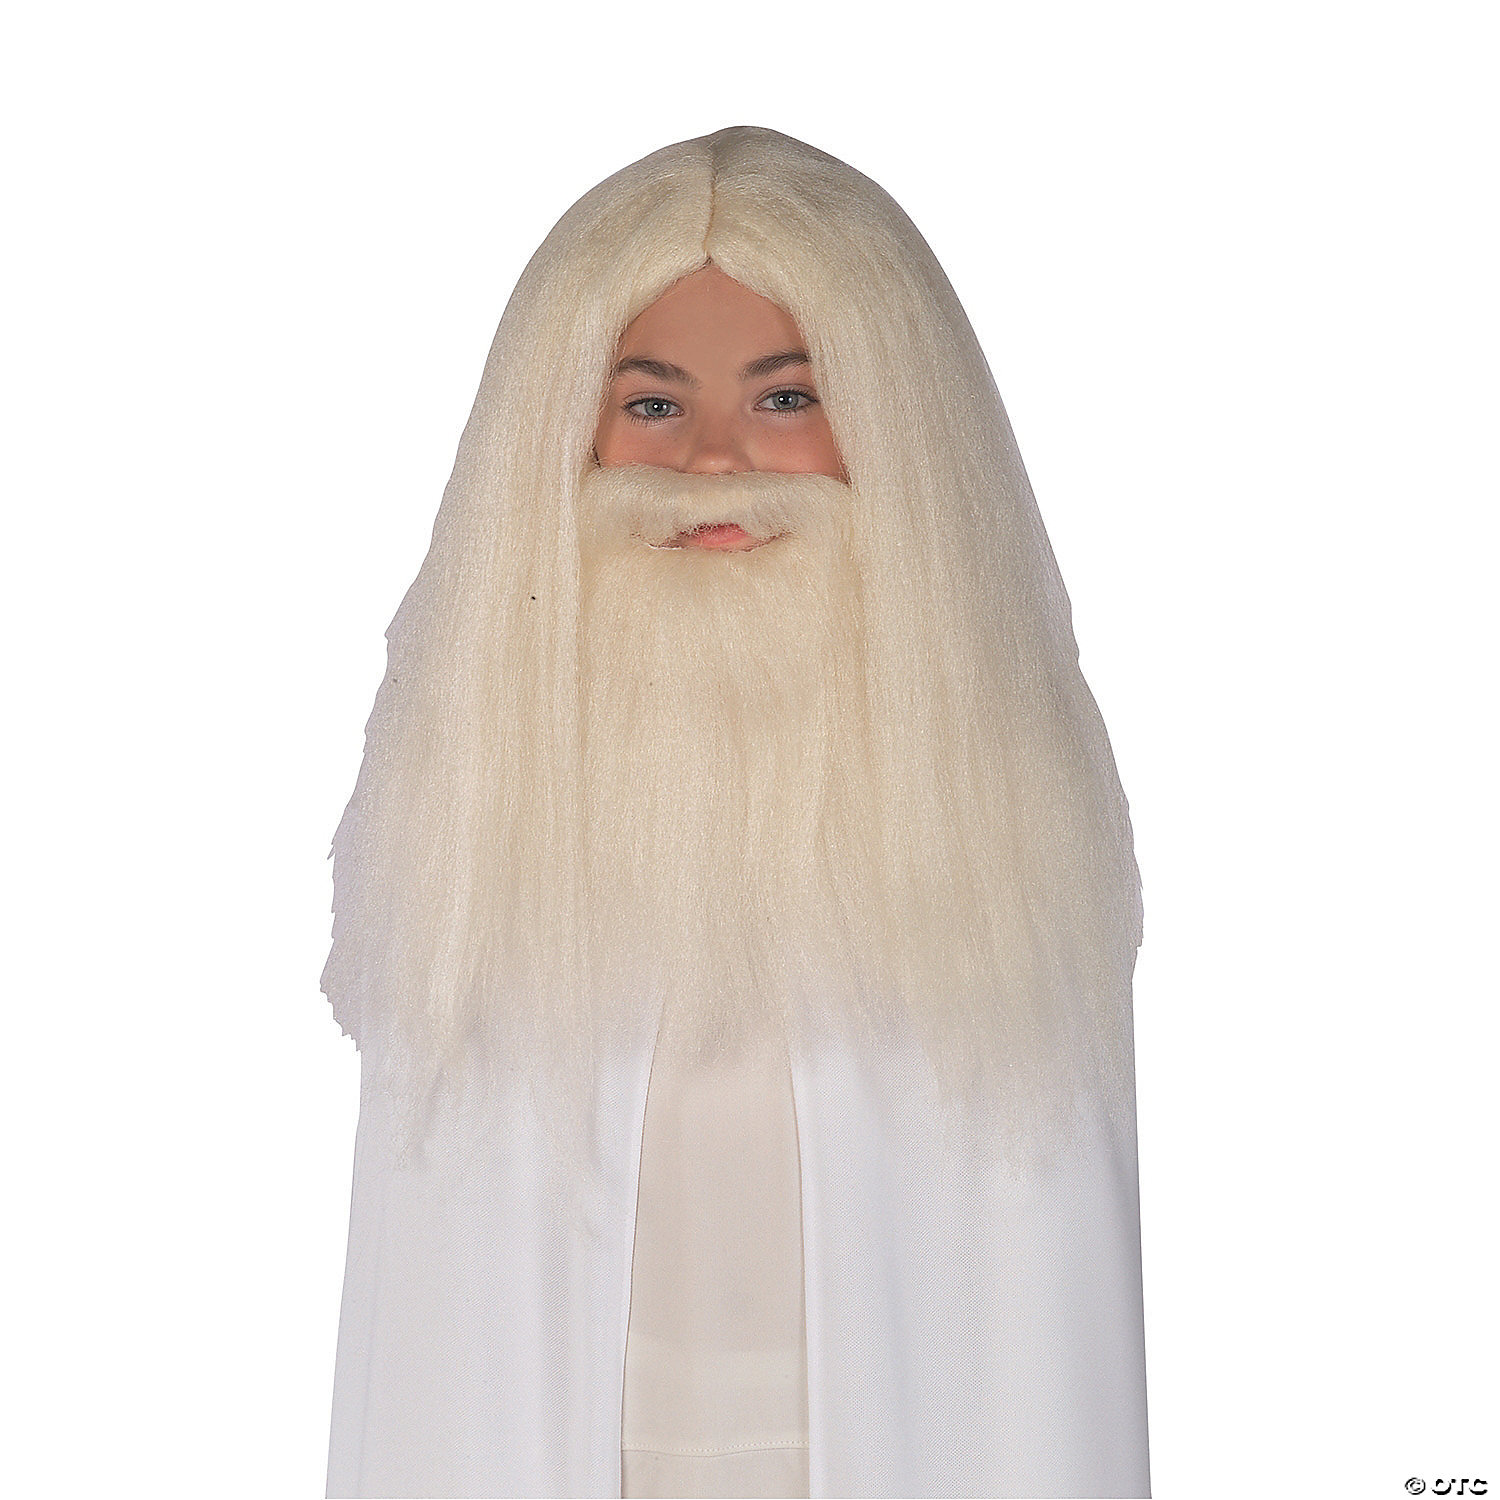 Details about   Hobbit Gandalf Wig Beard & Mustache Kit Adult Halloween Costume One Size Rubies